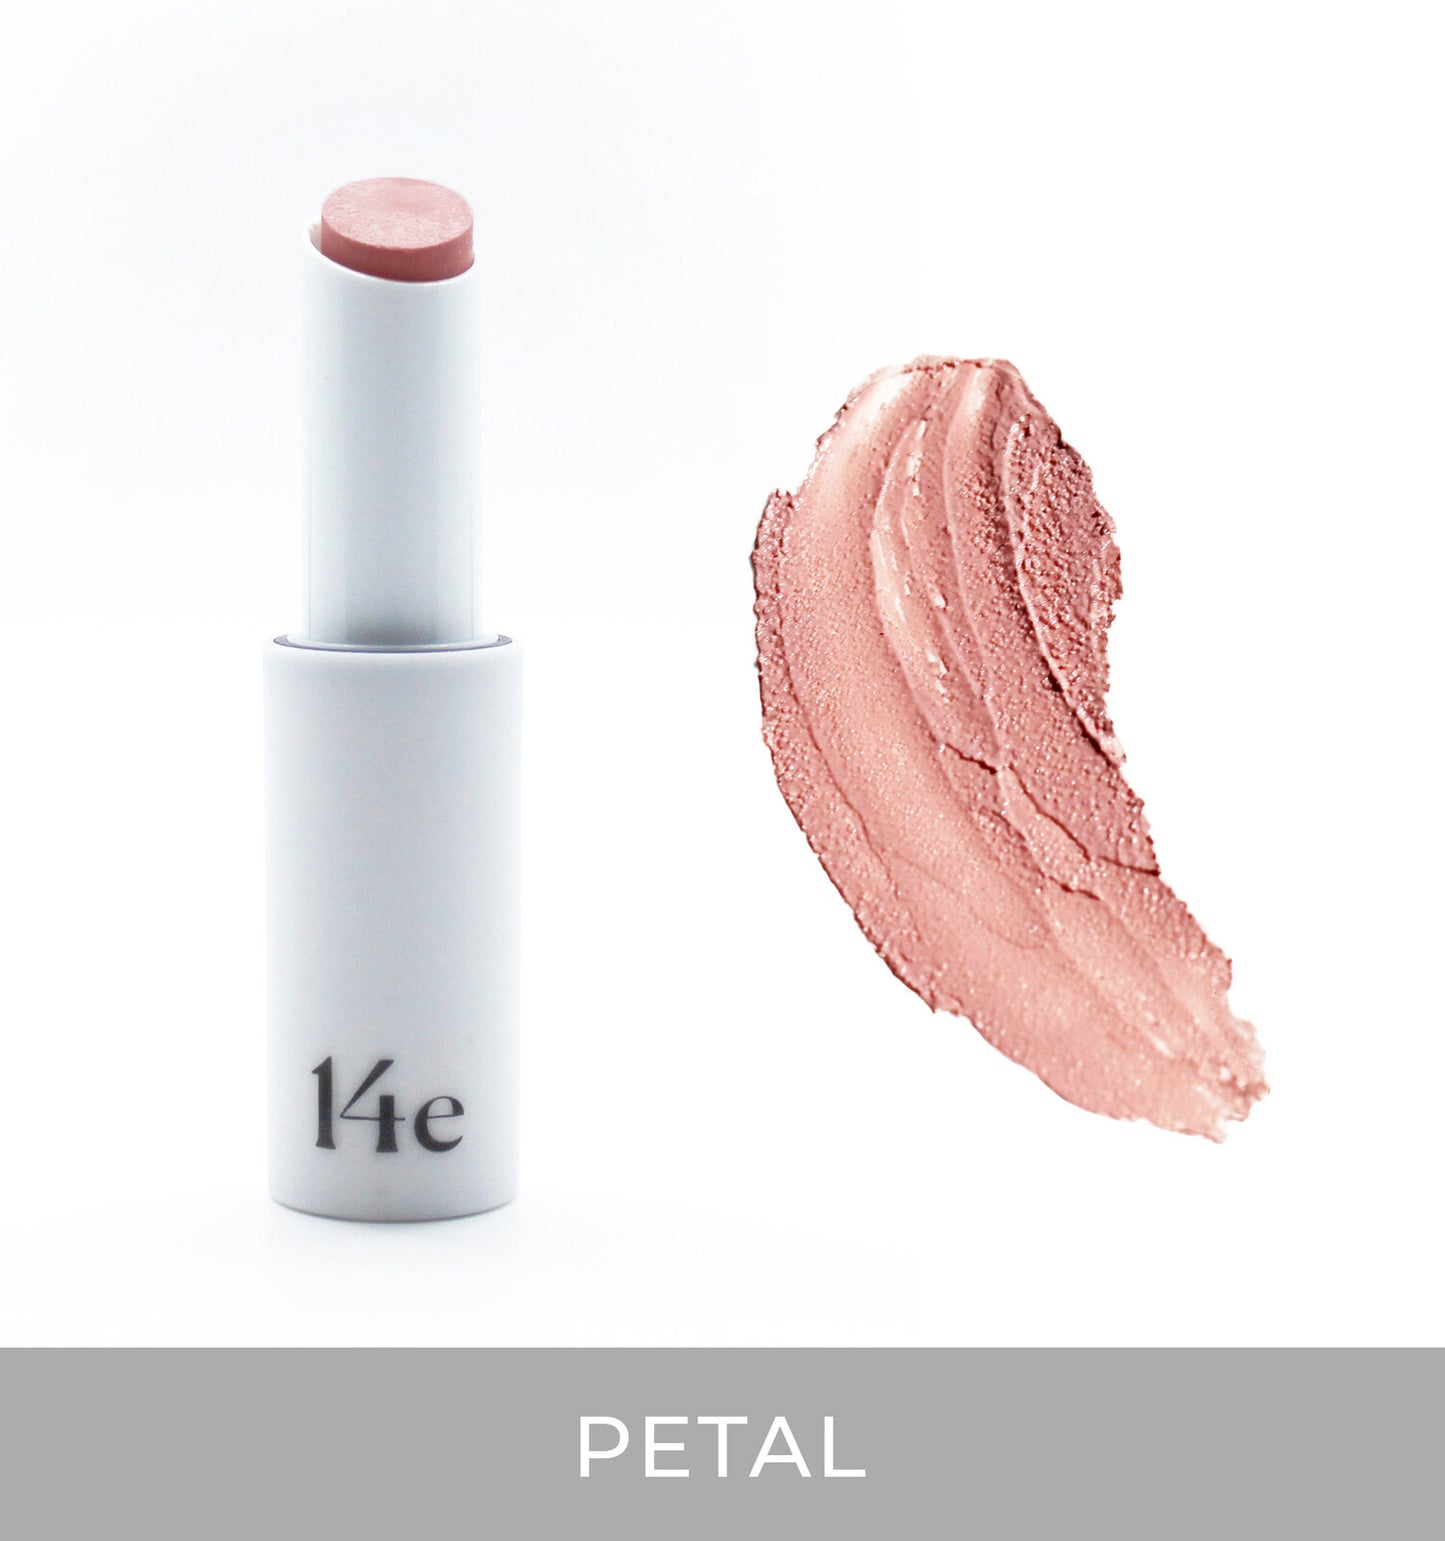 14e Cosmetics - Aloe lip sheen